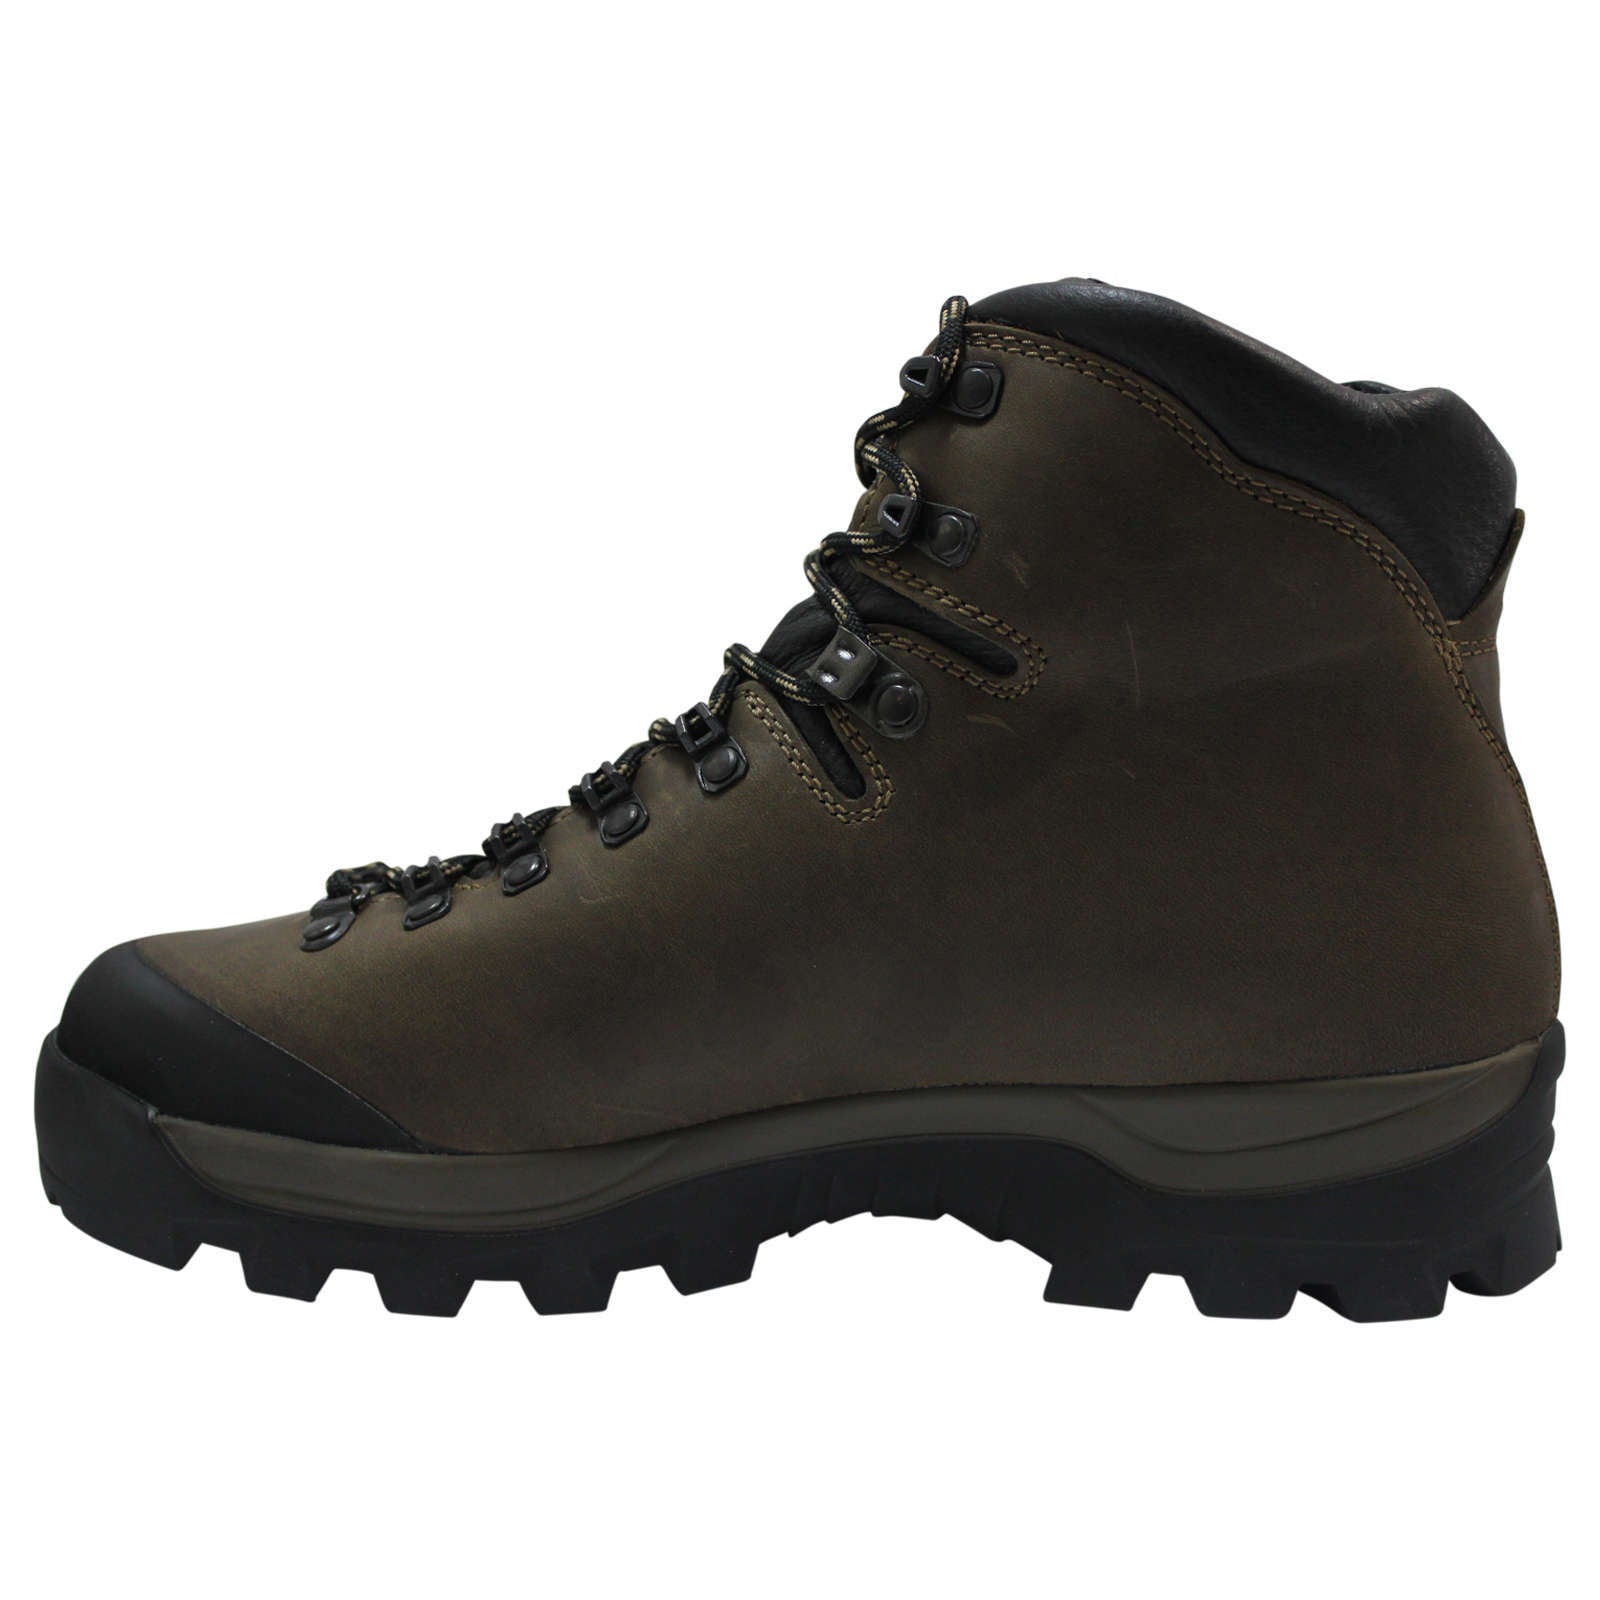 Zamberlan 1107 Virtex GTX RR Leather Men's Waterproof Trekking Boots#color_waxed chesnut